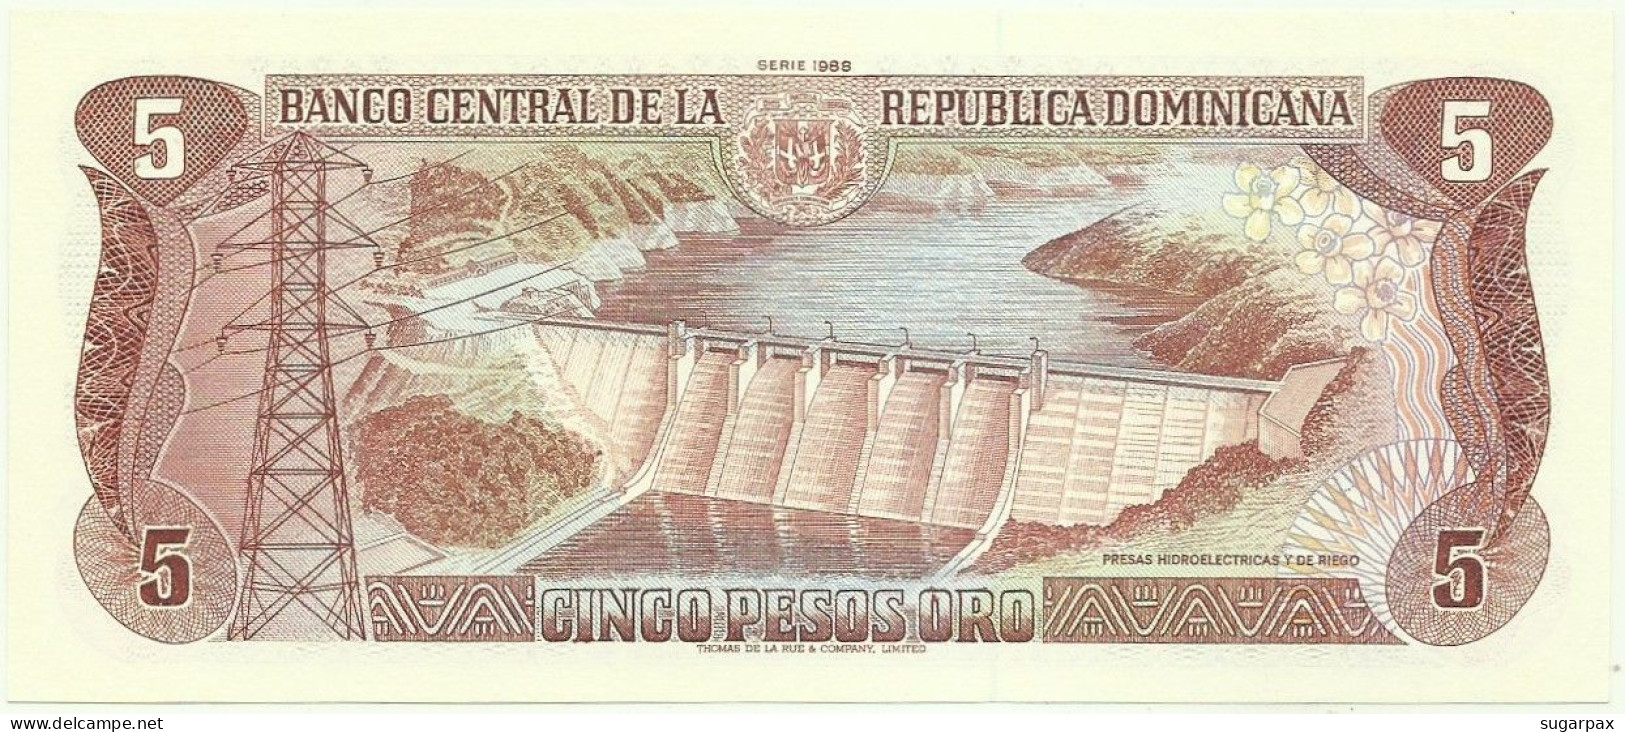 Dominican Republic - 5 Pesos Oro - 1988 - P 118.c - Unc. - República Dominicana